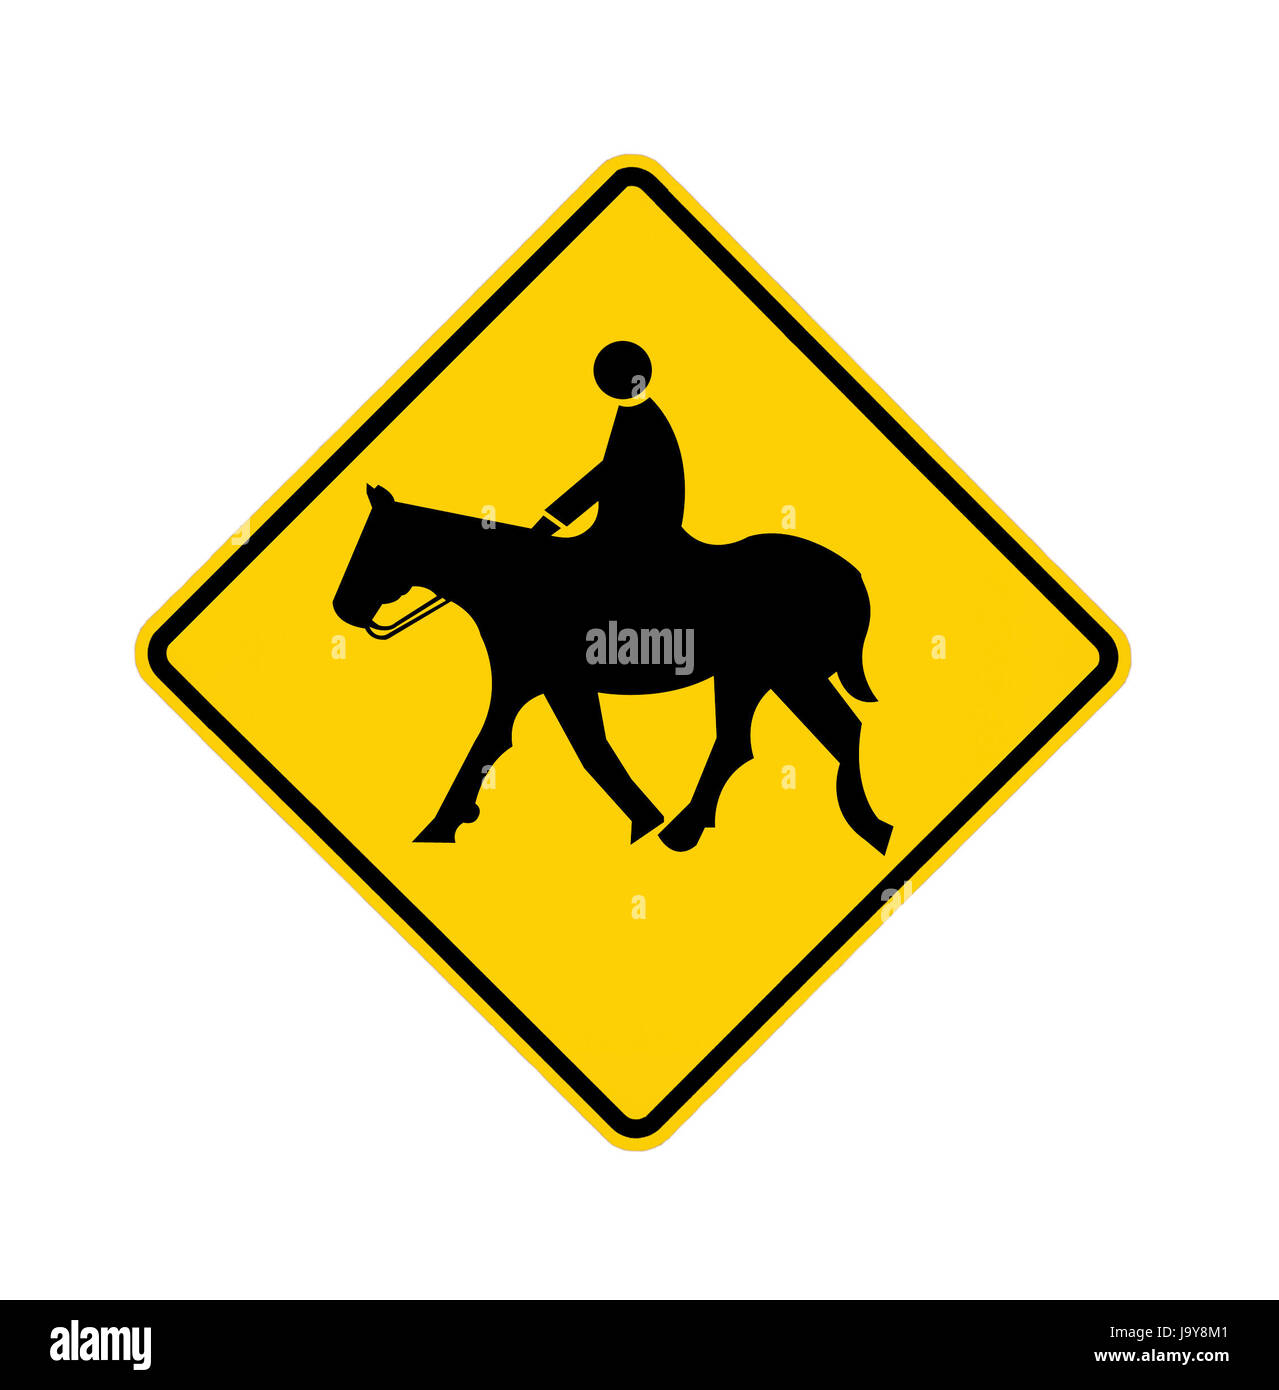 road sign - horseback rider Stock Photo